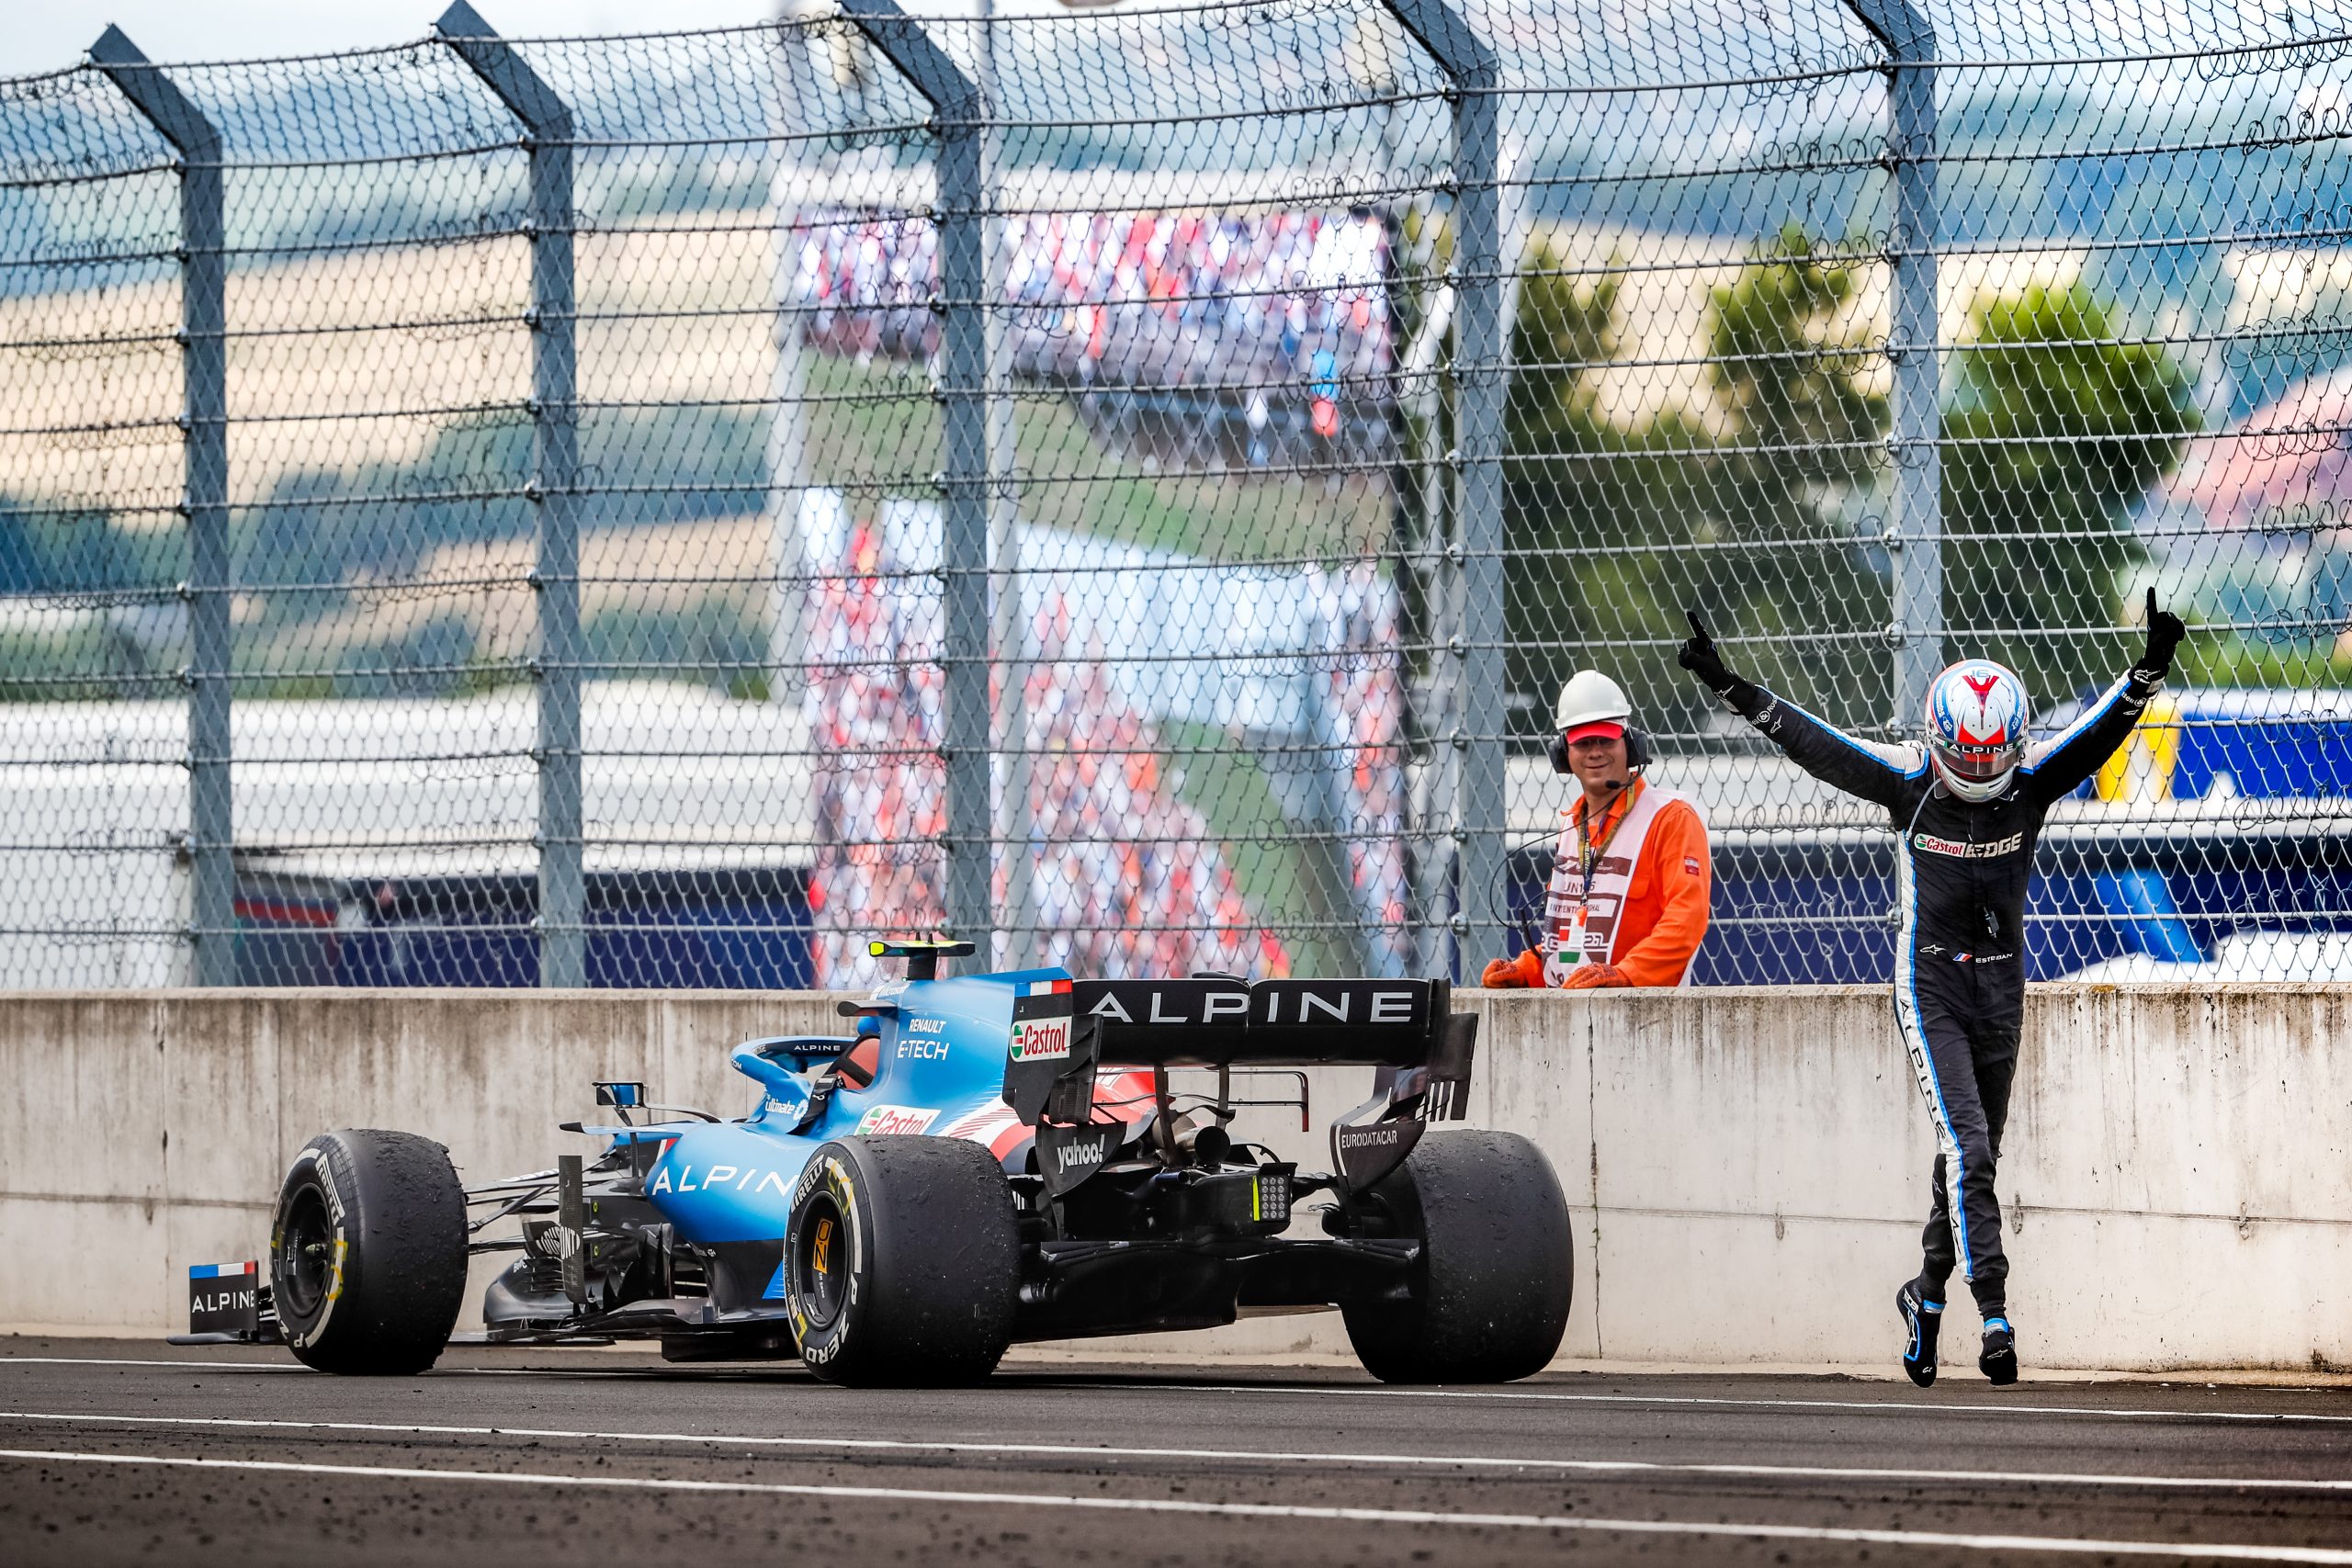 F1 – HUNGARIAN GRAND PRIX 2021 – RACE